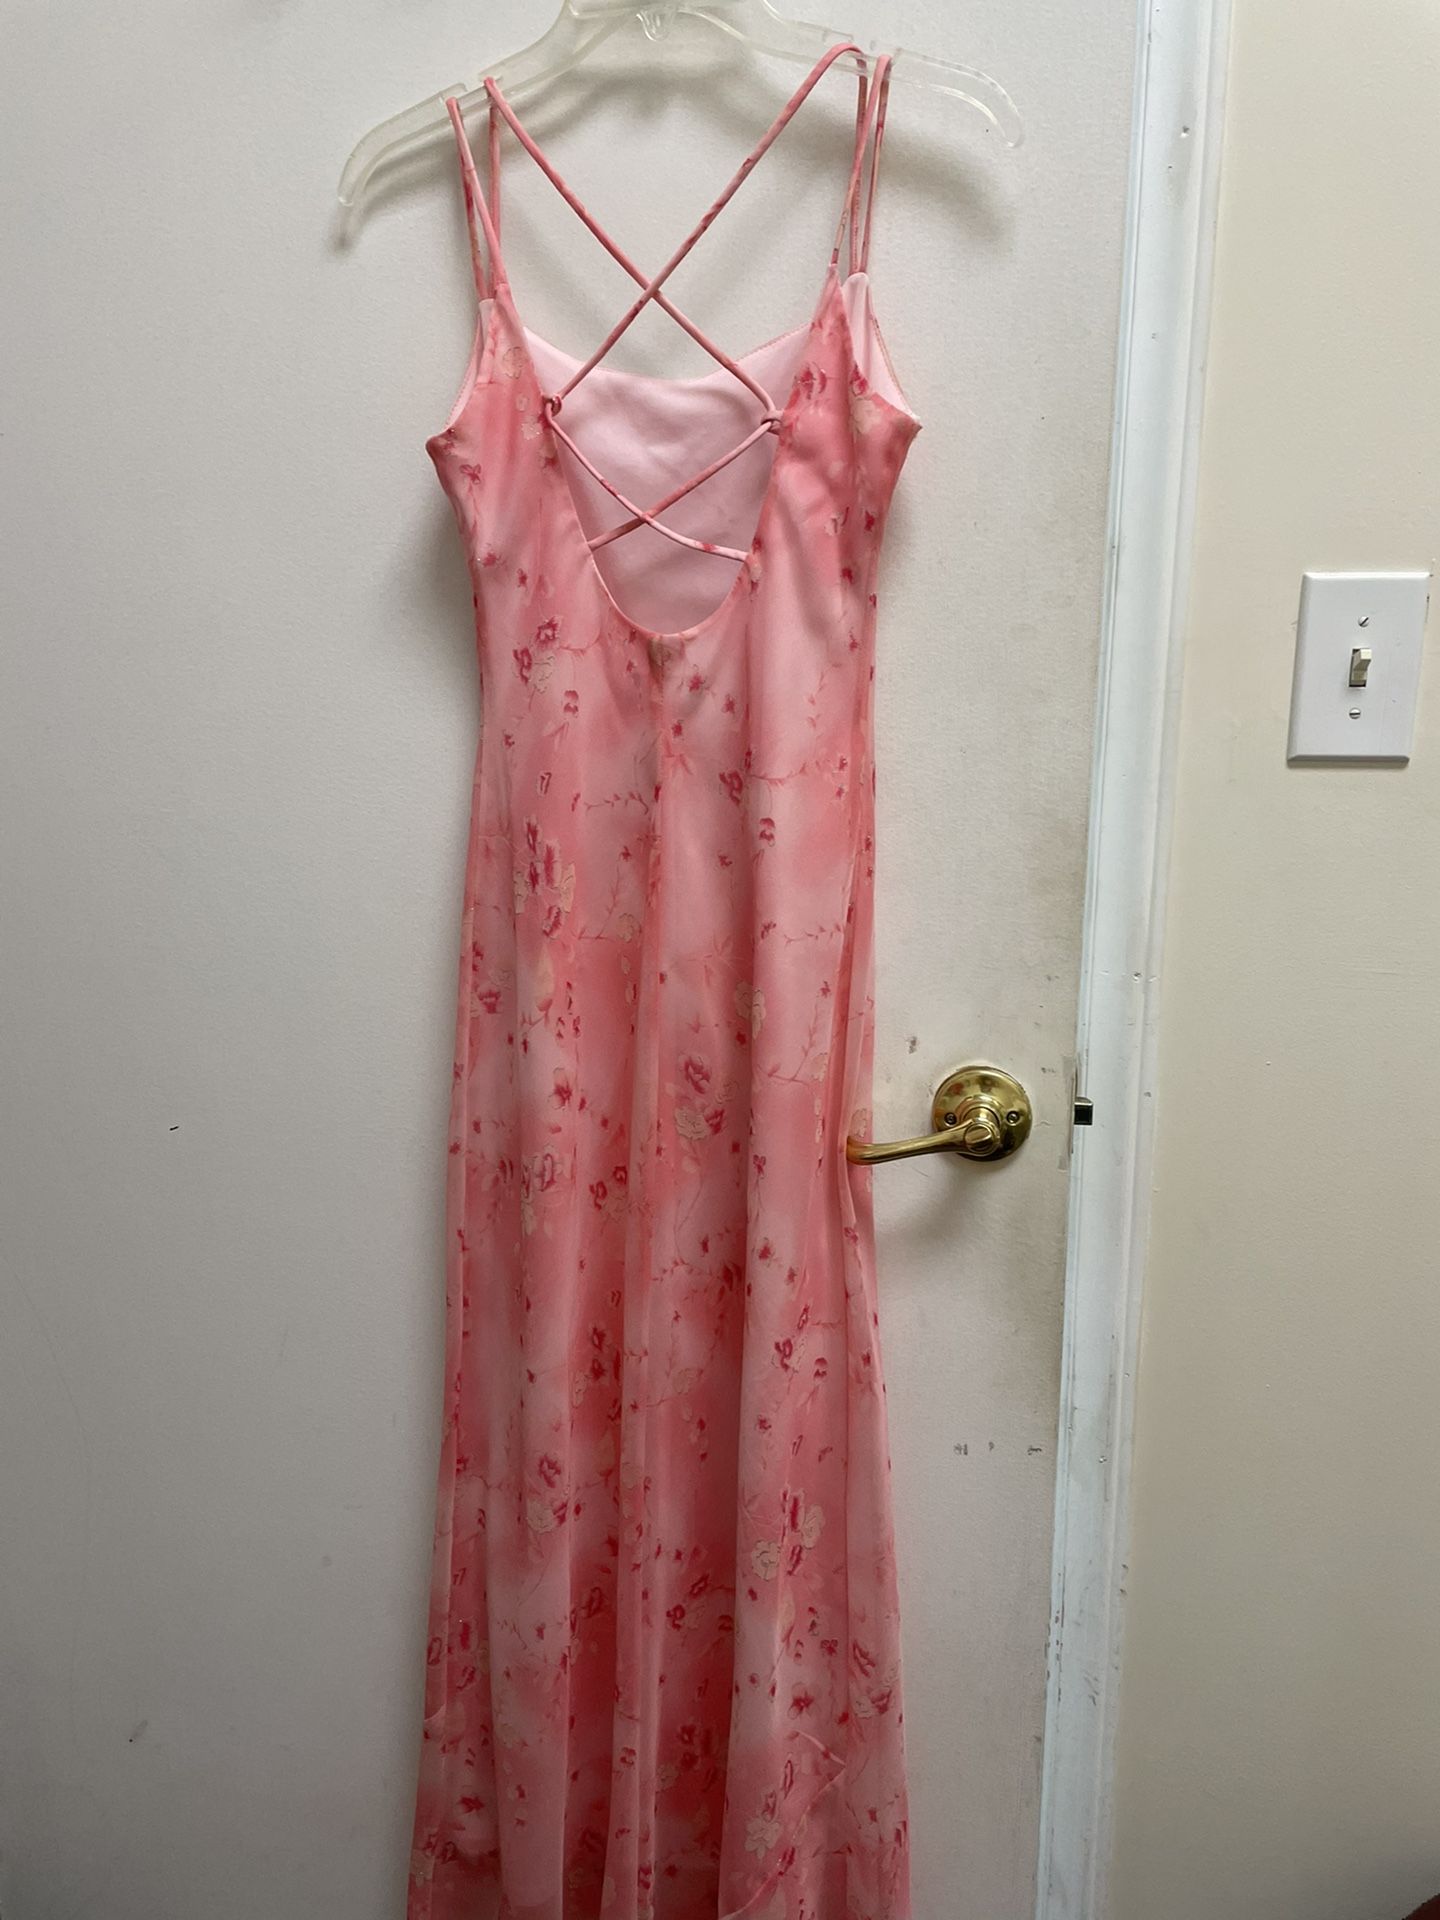 Dress Size Medium $10 Each 